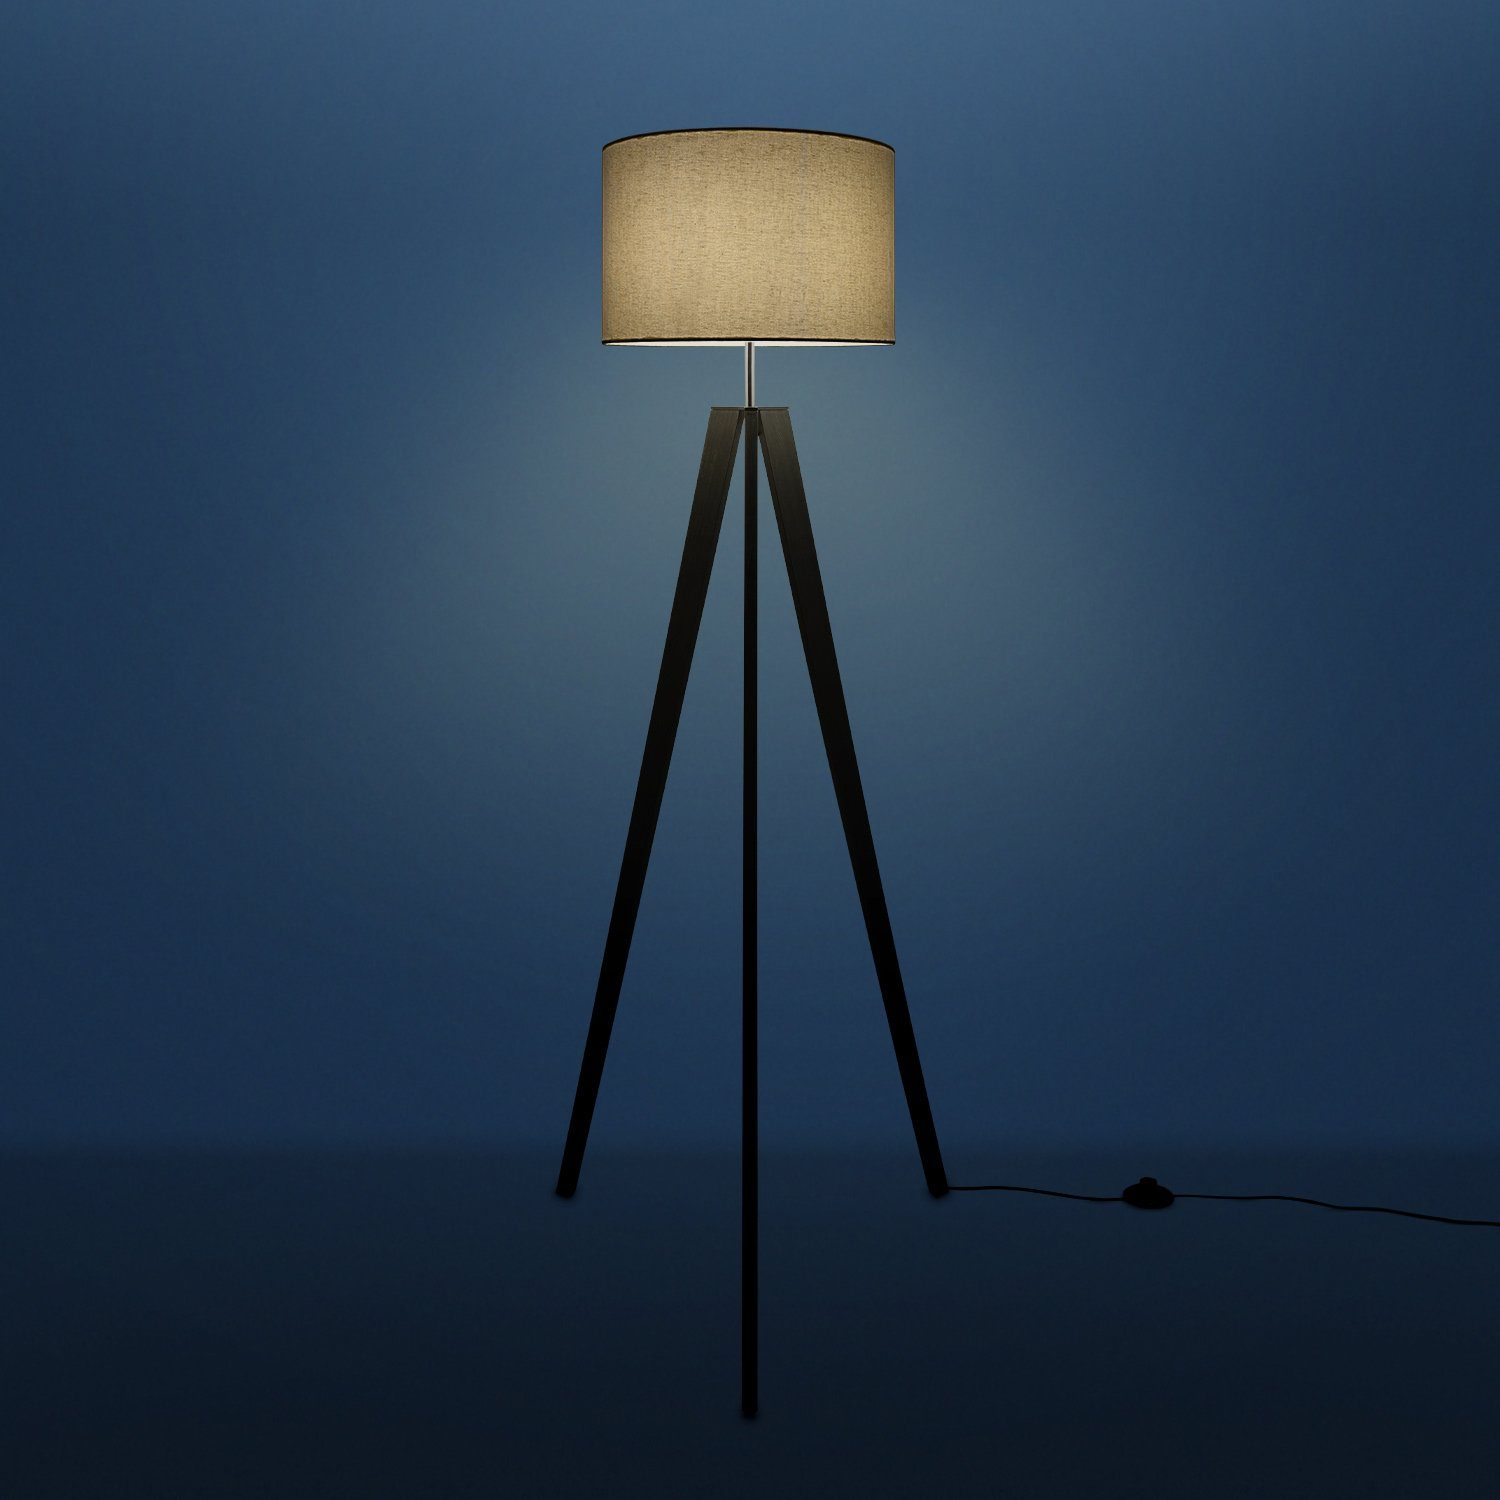 Paco Home Stehlampe Canvas uni Leuchtmittel, Stehlampe E27 Color, LED Fuß Wohnzimmer Stil Skandinavischer ohne Vintage Lampe